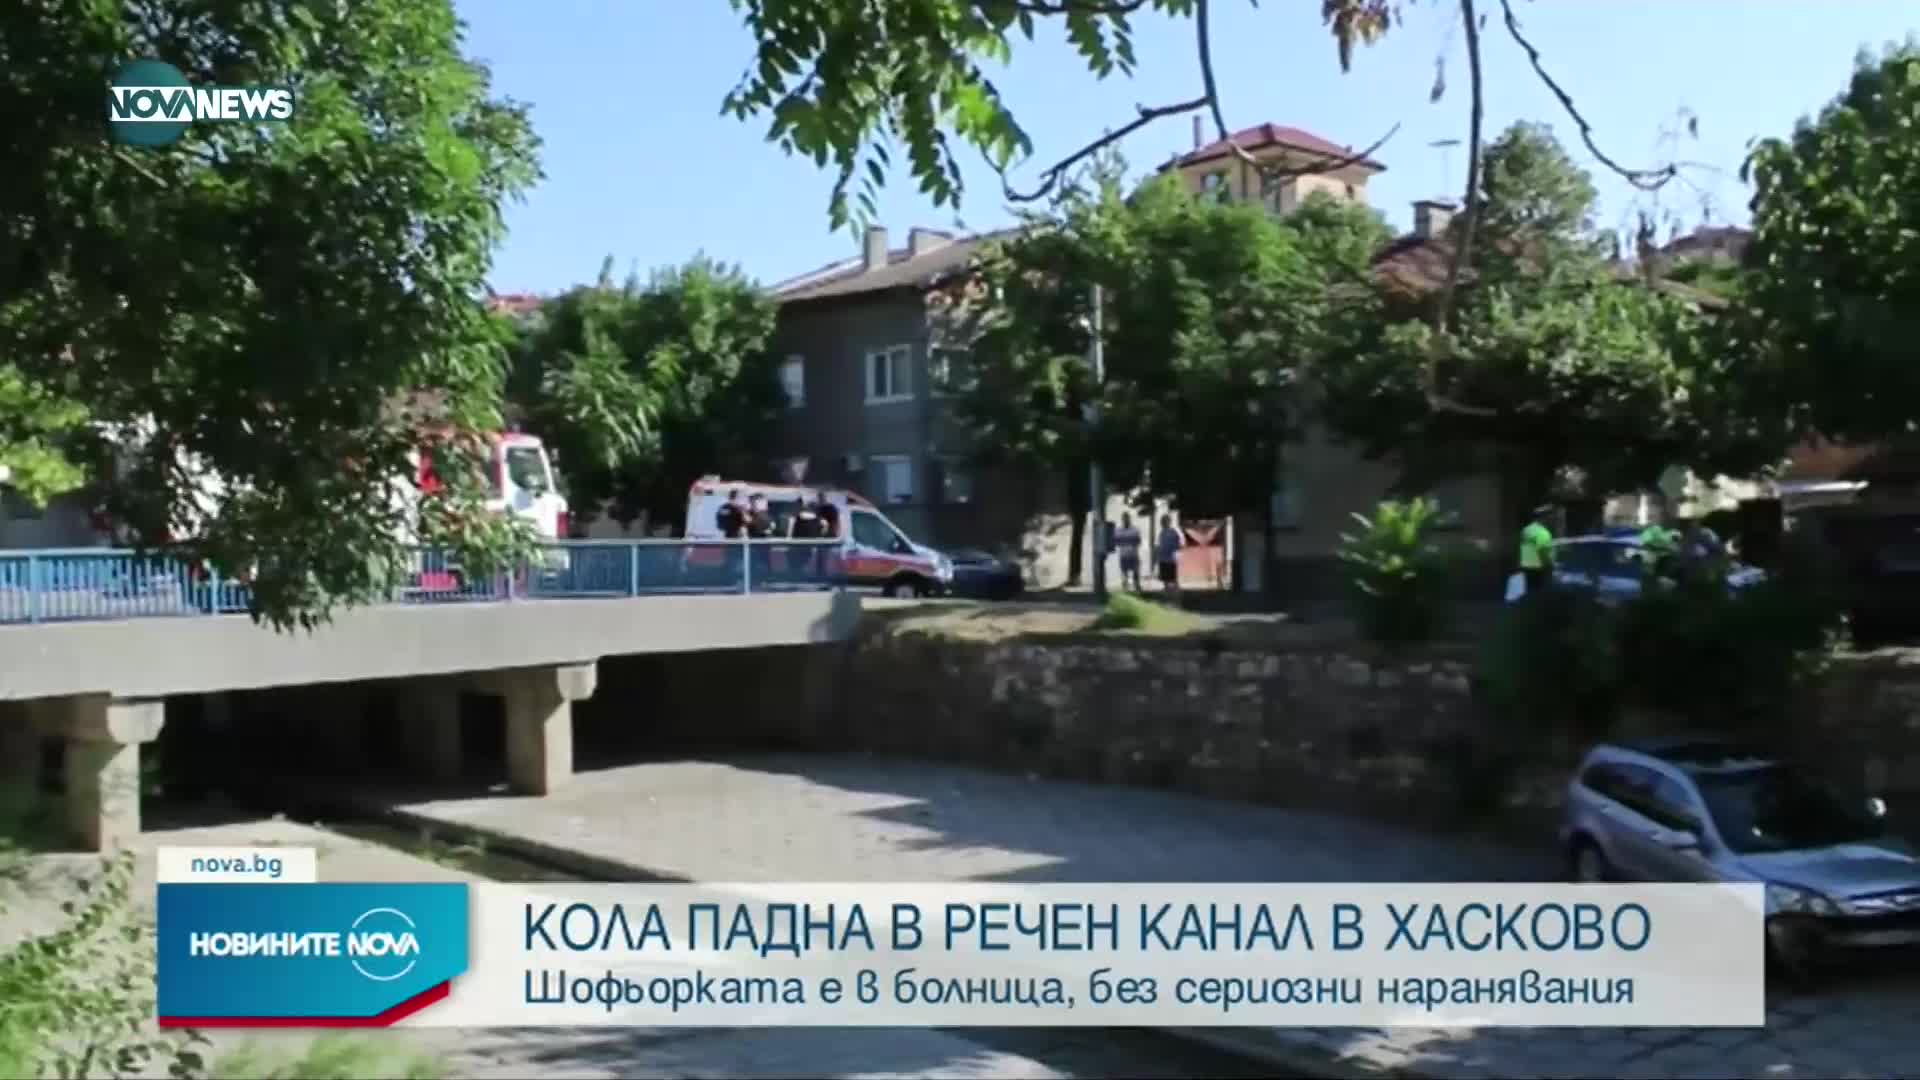 Кола падна в река в Хасково, жена е в болница